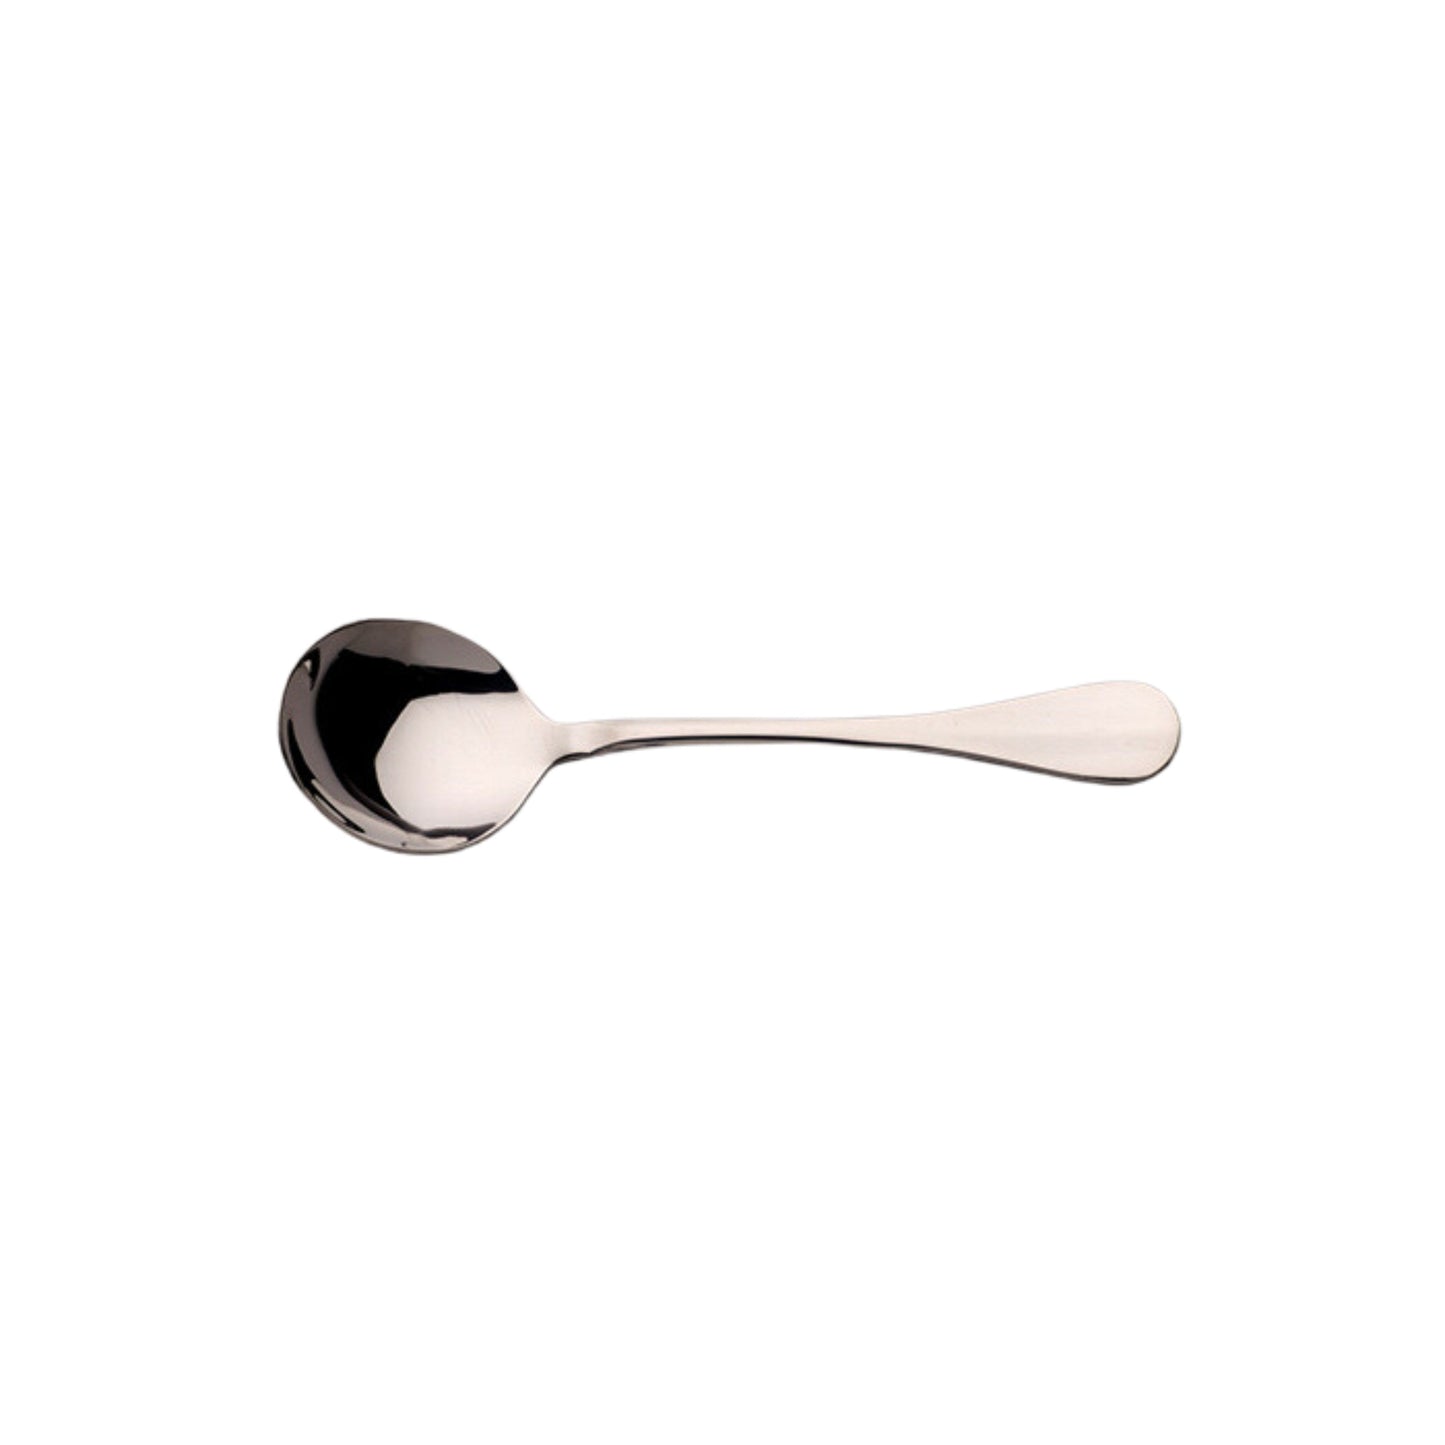 Rattail stainless steel flatware cutlery